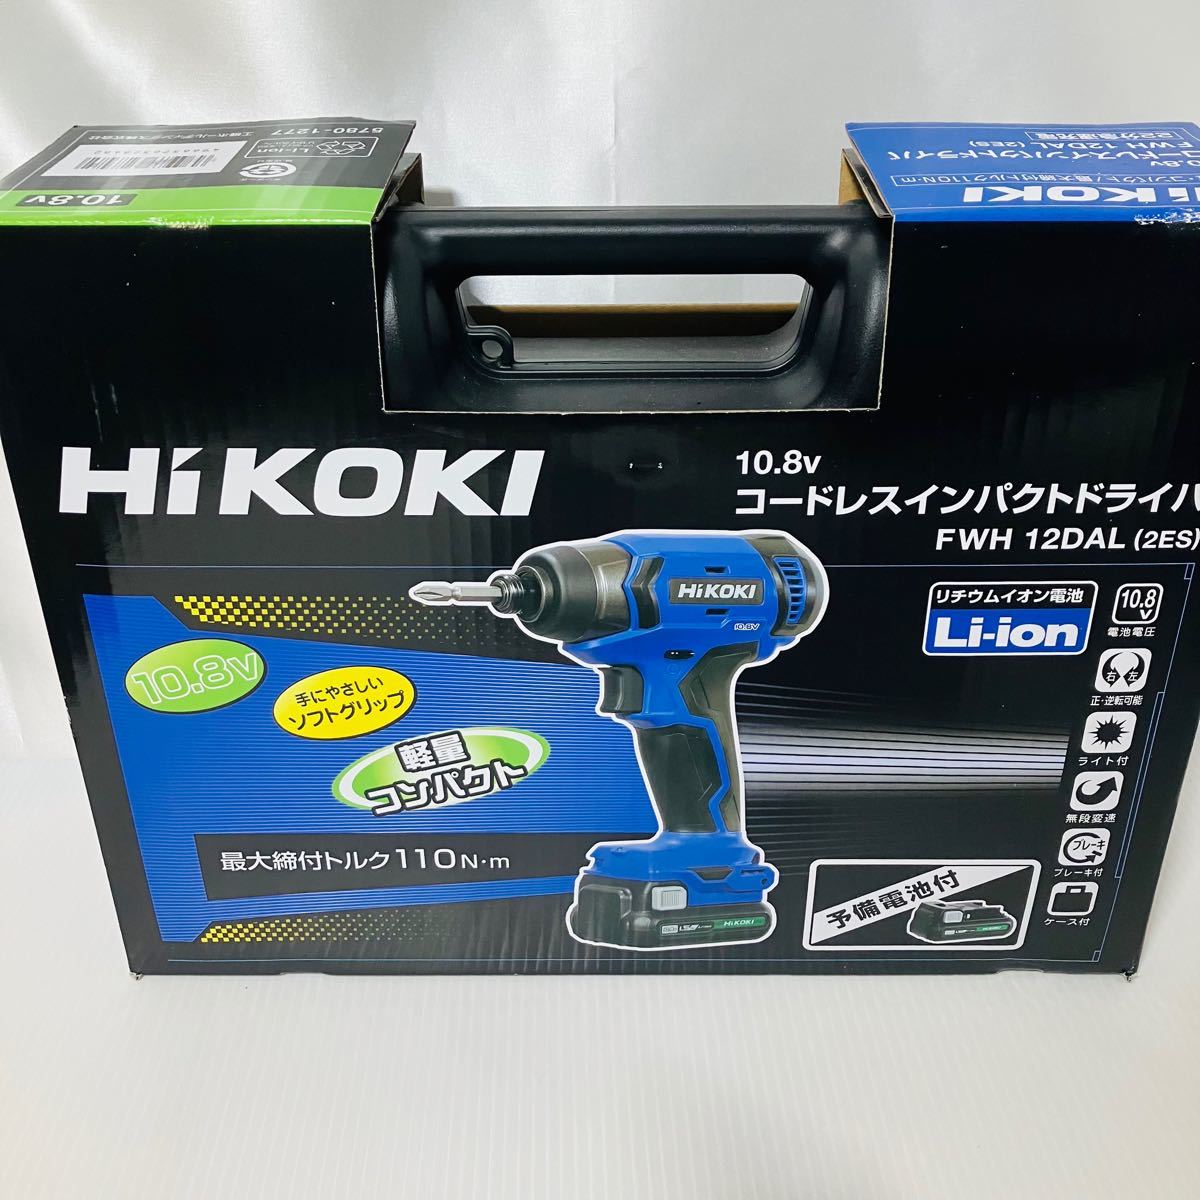 HiKOKI (ハイコーキ) コードレス振動ドライバドリル 10.8Vスライド式